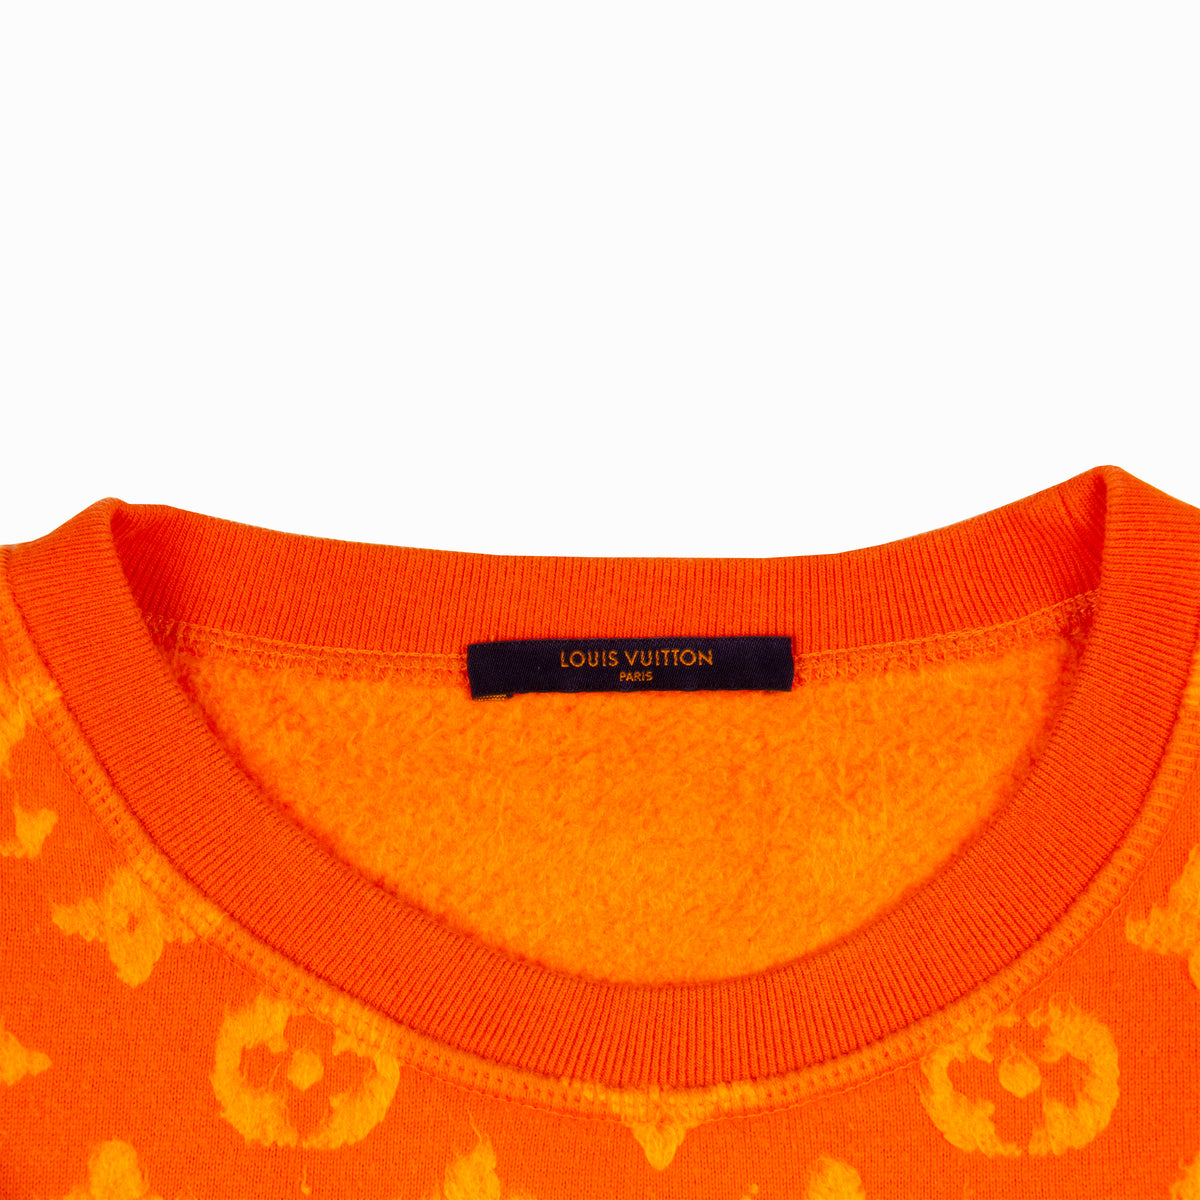 Rawest Monogram Sweater Orange (The Rawest) – DT BV